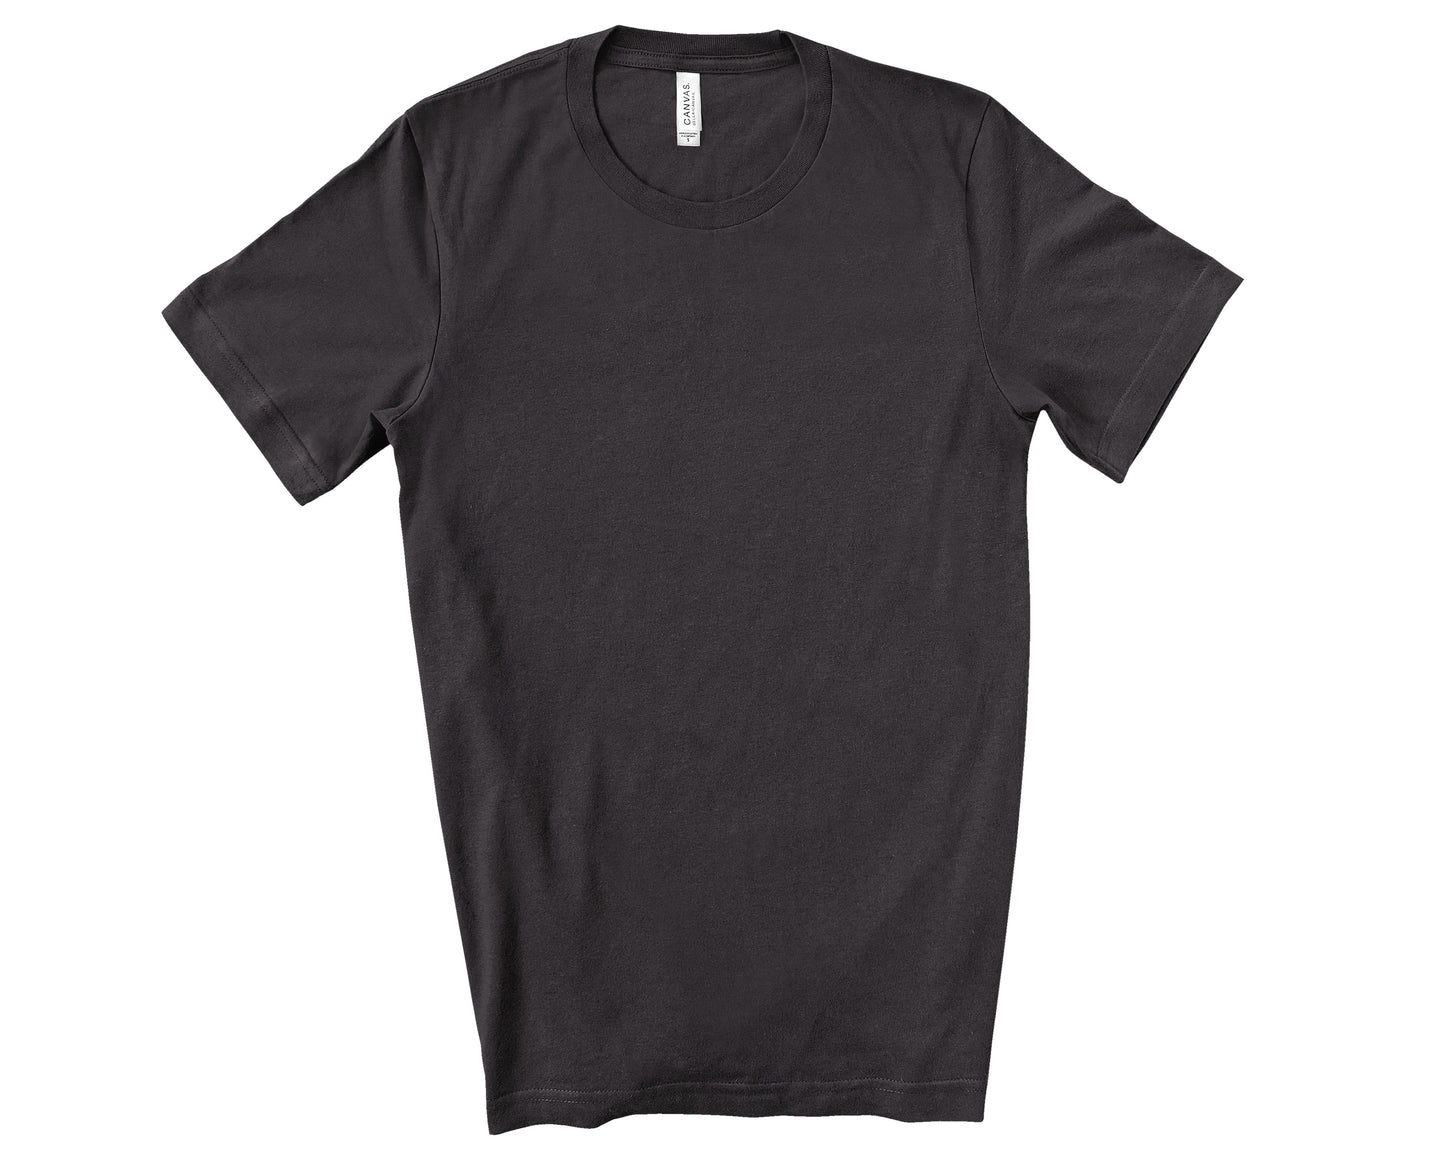 Living Testimony - Unisex Premium T-Shirt